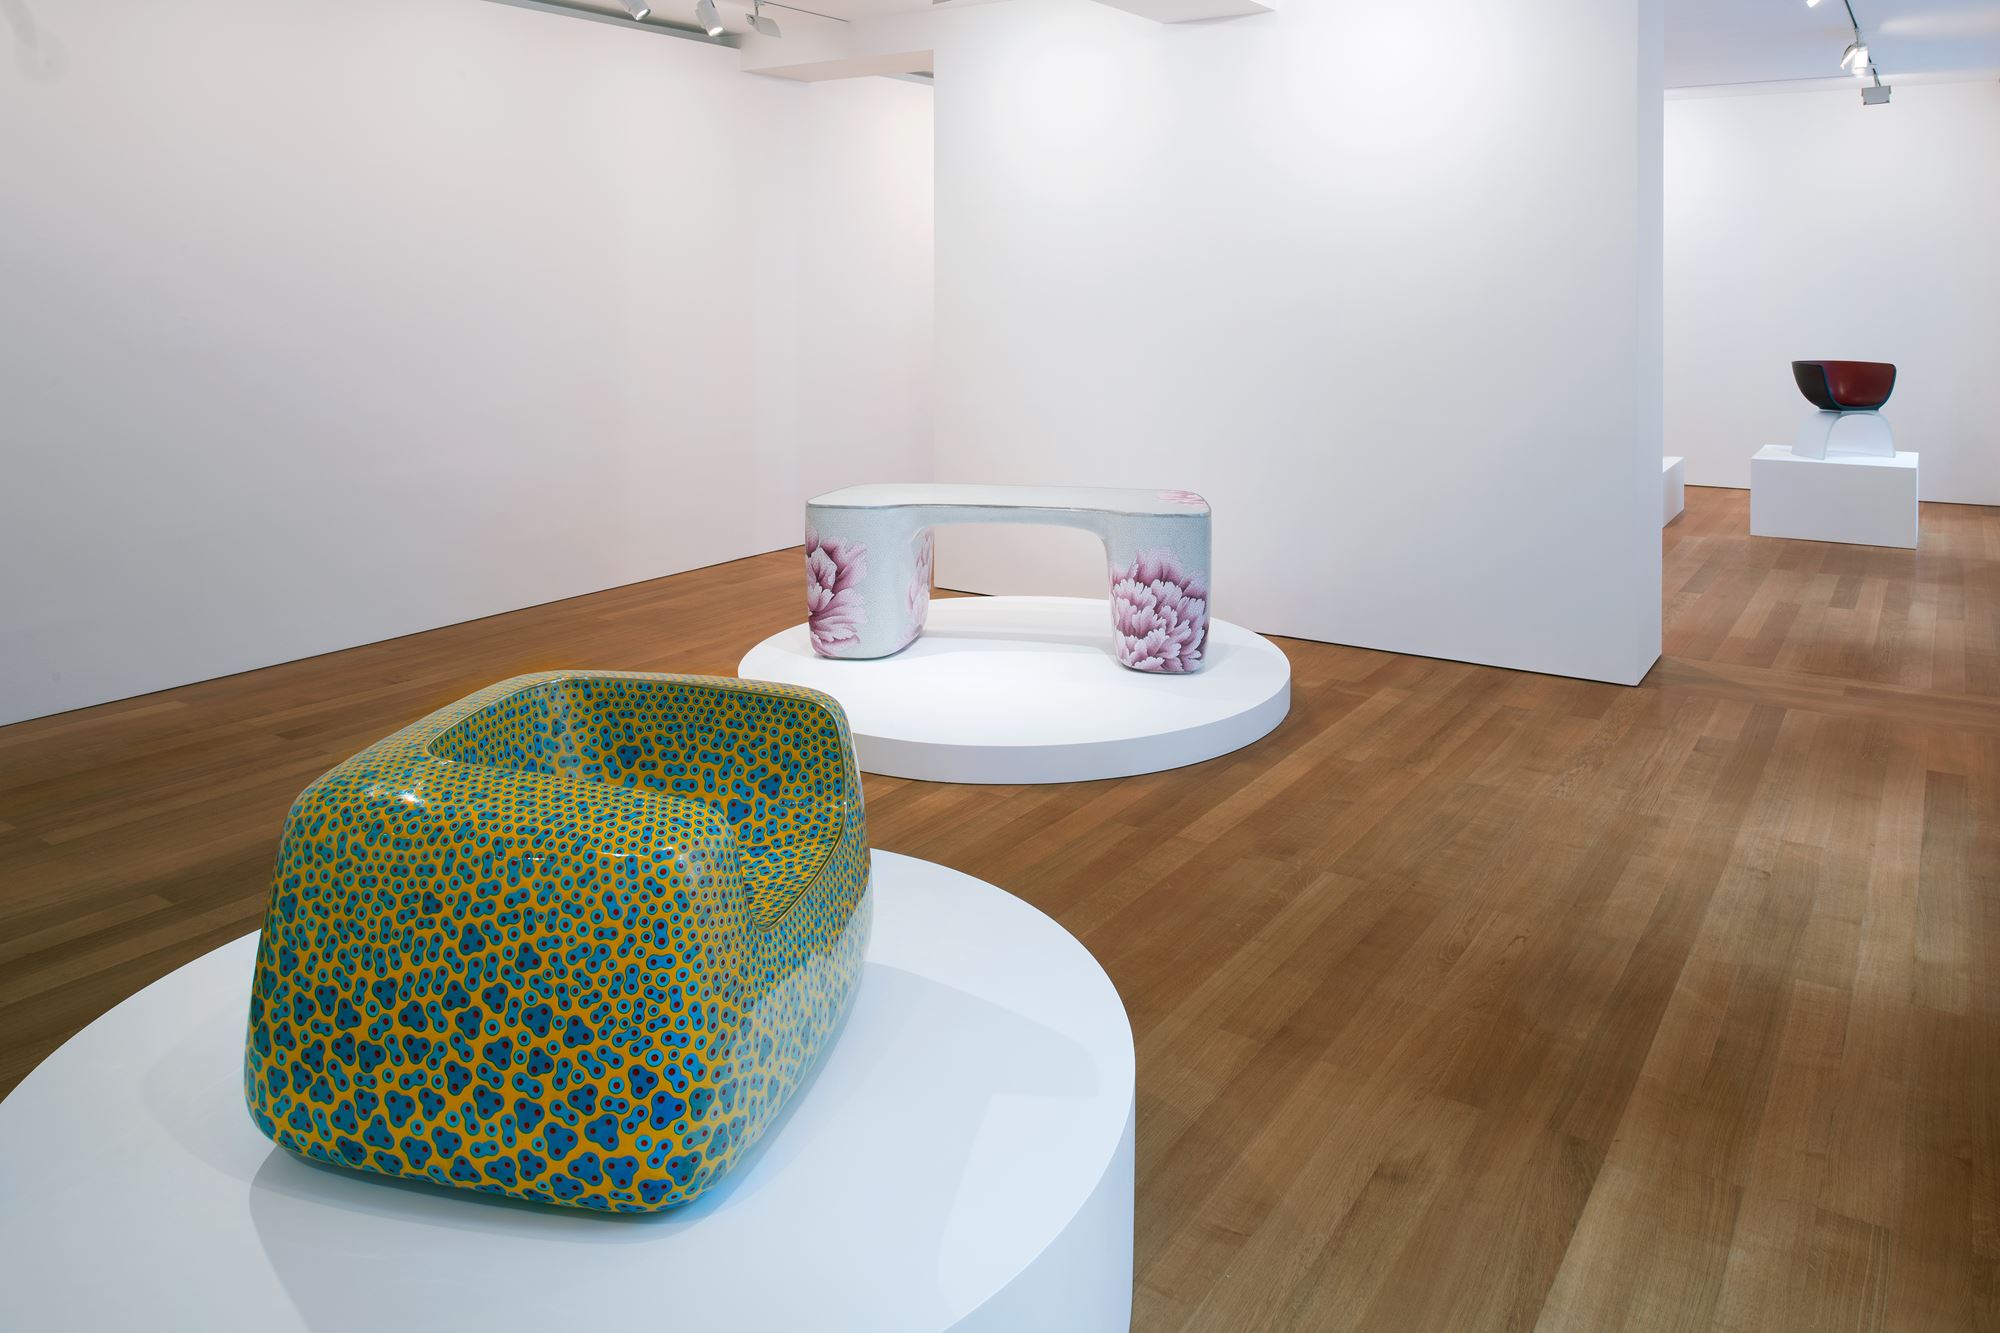 Cast Glass Chair, Marc Newson Exhibition